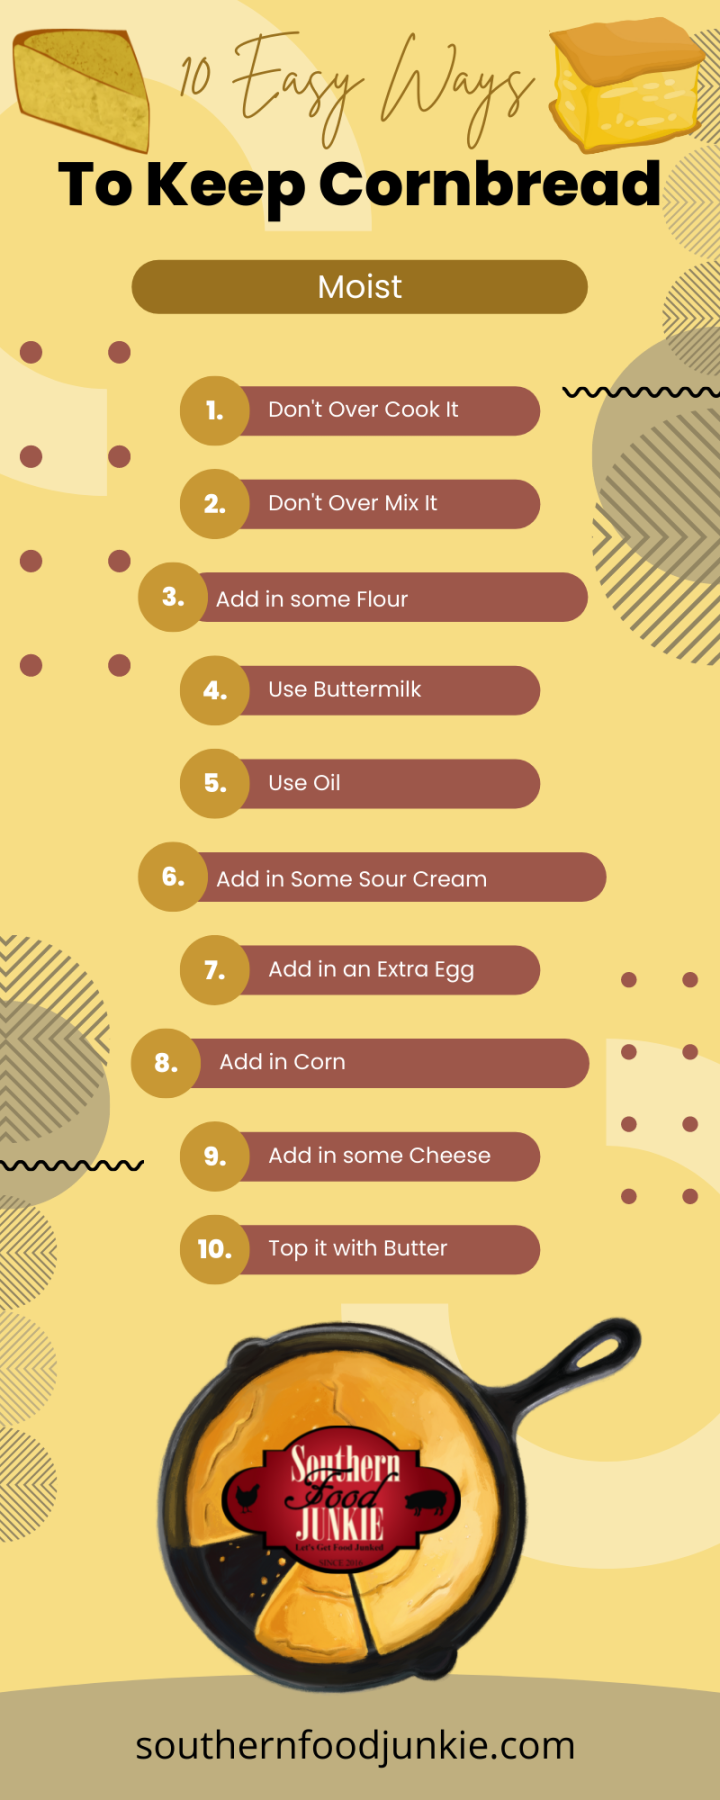 10 easy ways to keep cornbread moist infographic